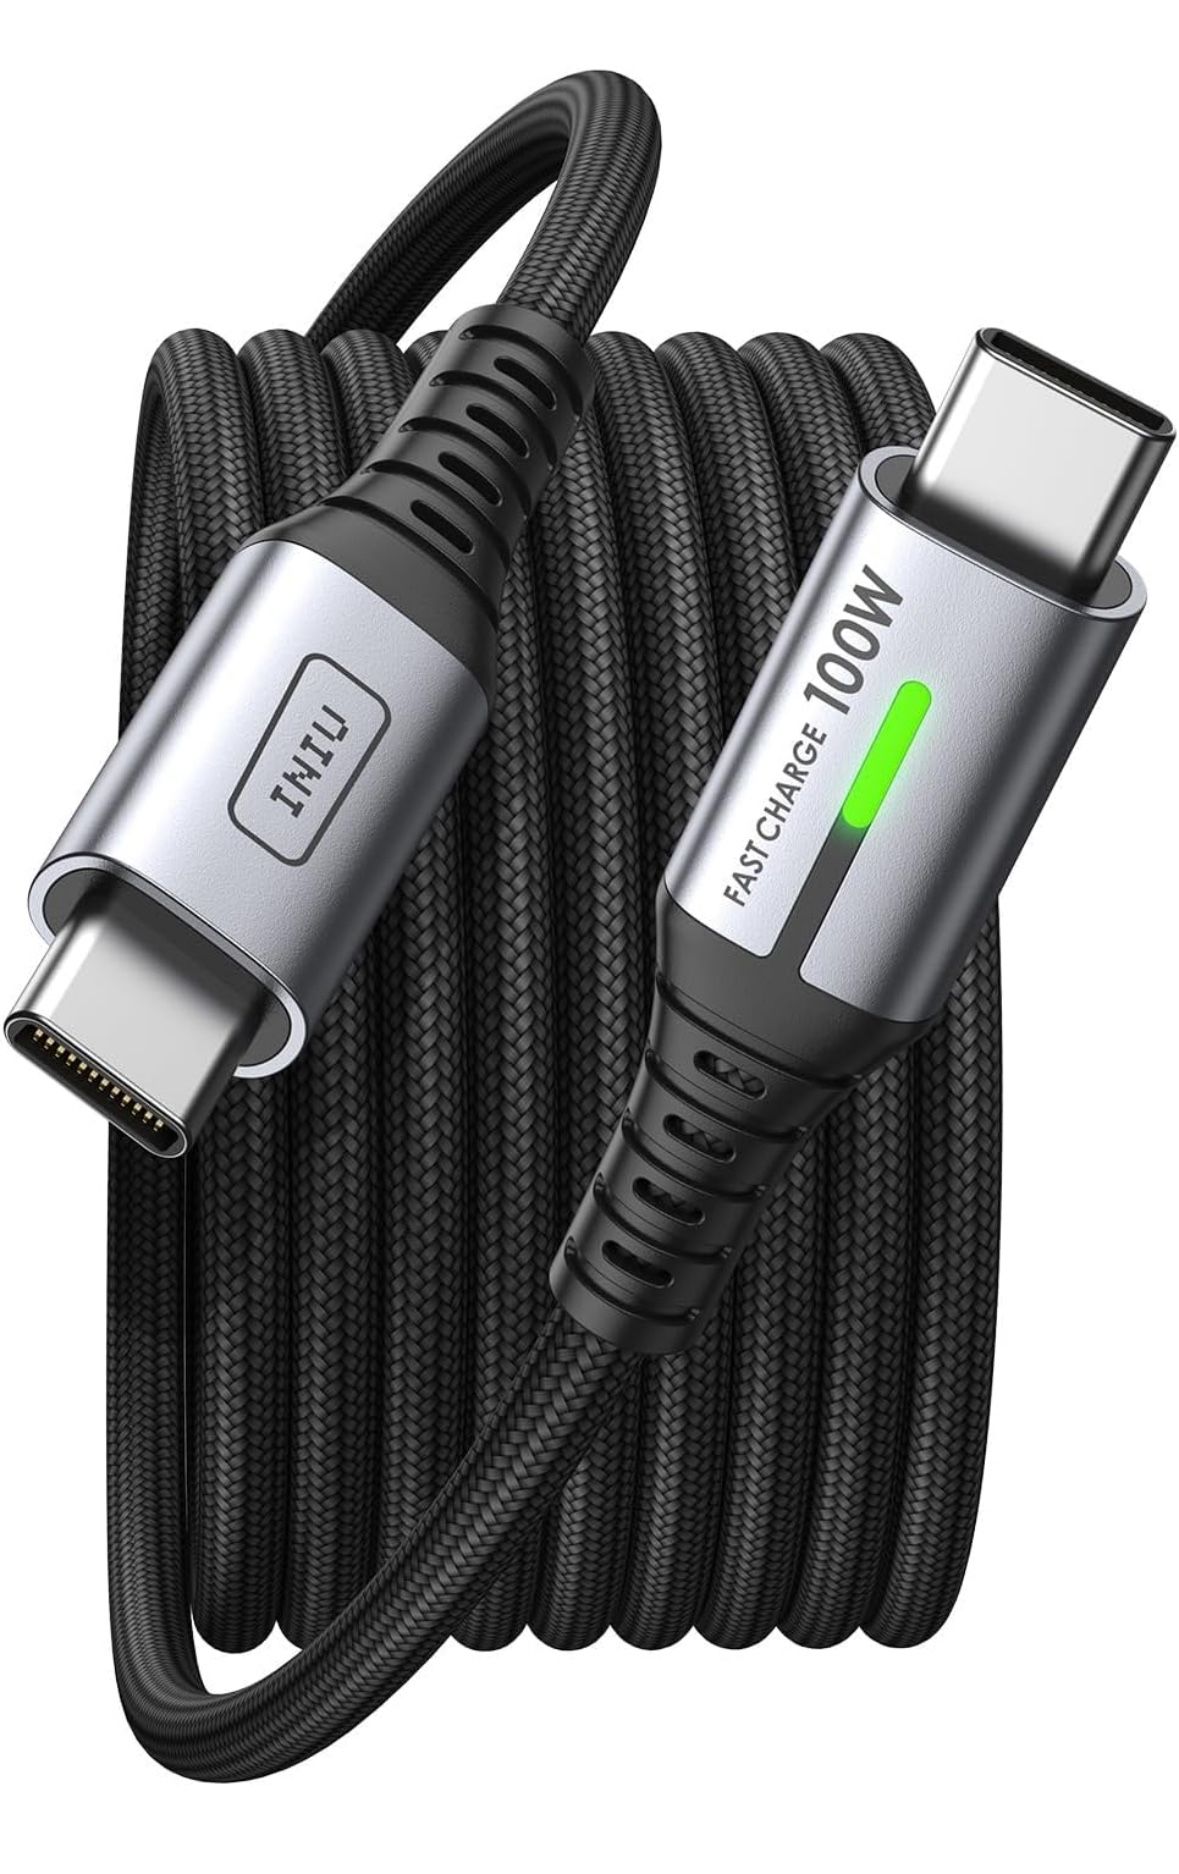 USB C Cable, INIU 6.6ft 100W PD 5A QC 4.0 Fast Charging USB C to USB C